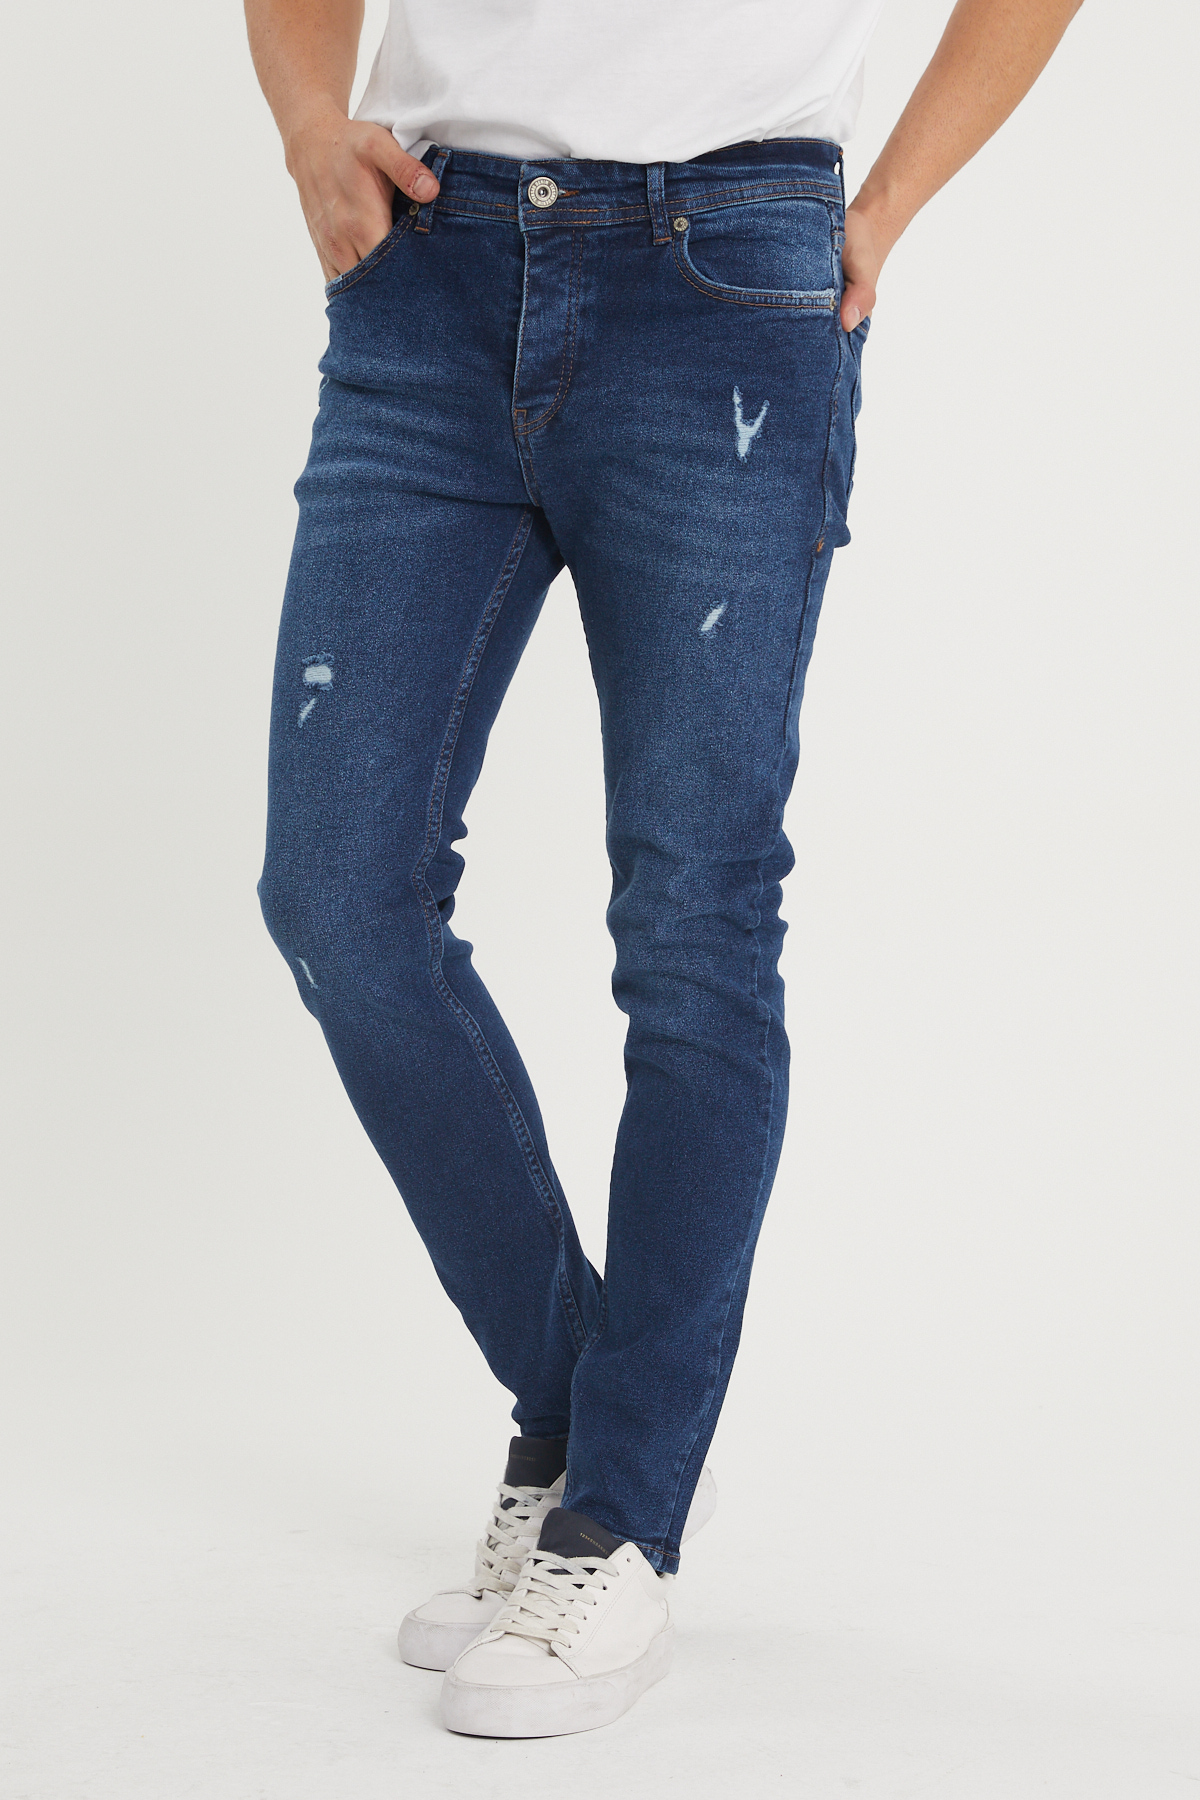 Lacivert Slim Fit Jean Pantolon 1KXE5-44352-14 - 1